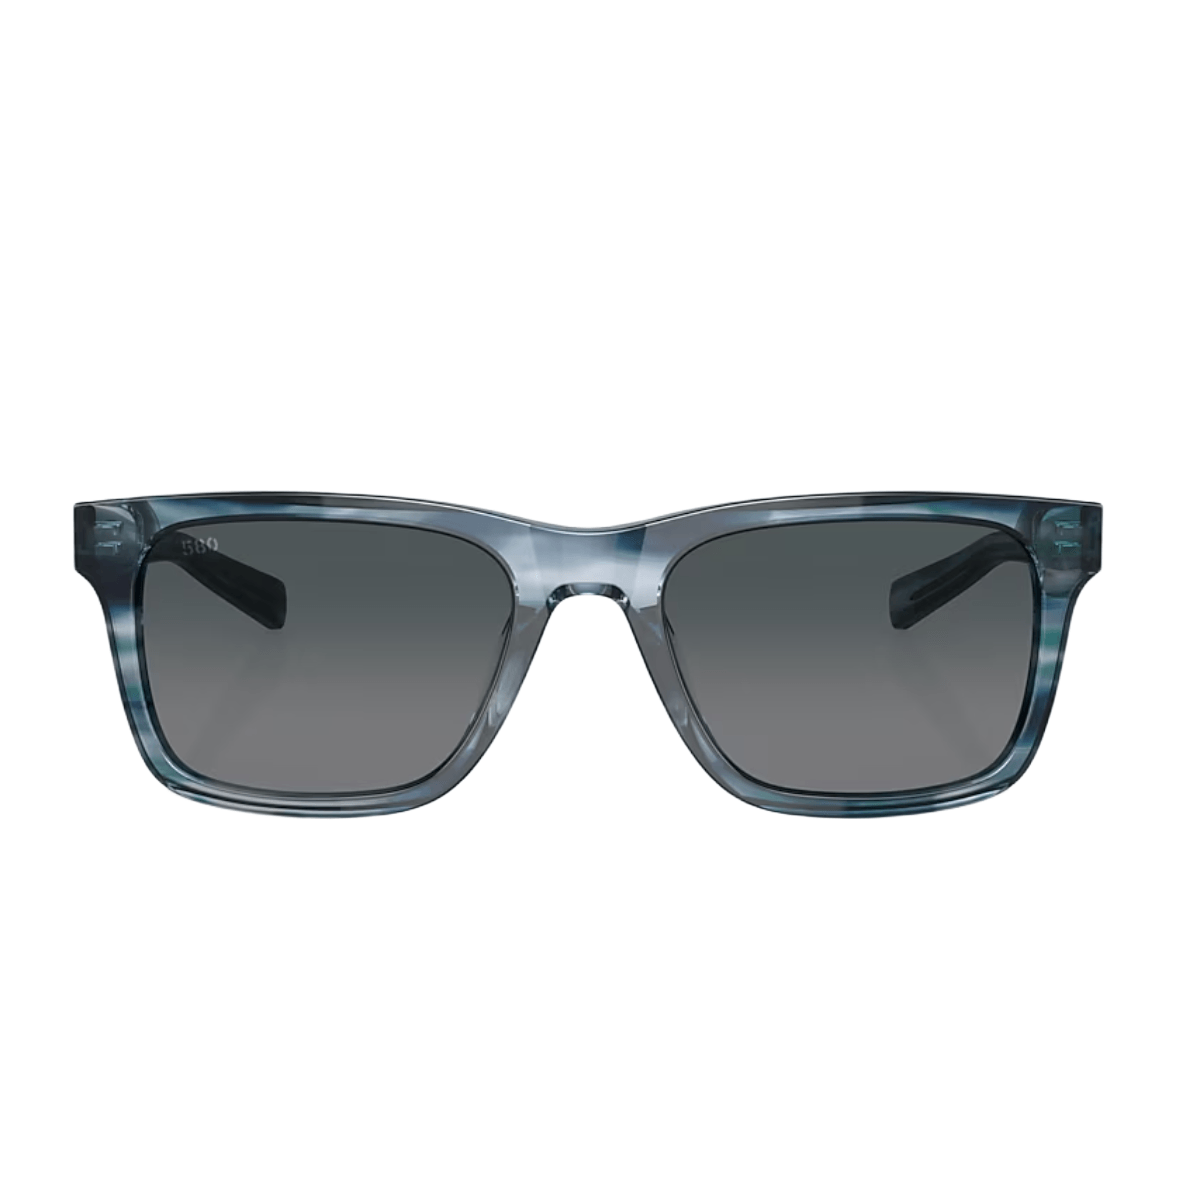 Costa Fernandina Sunglasses Review